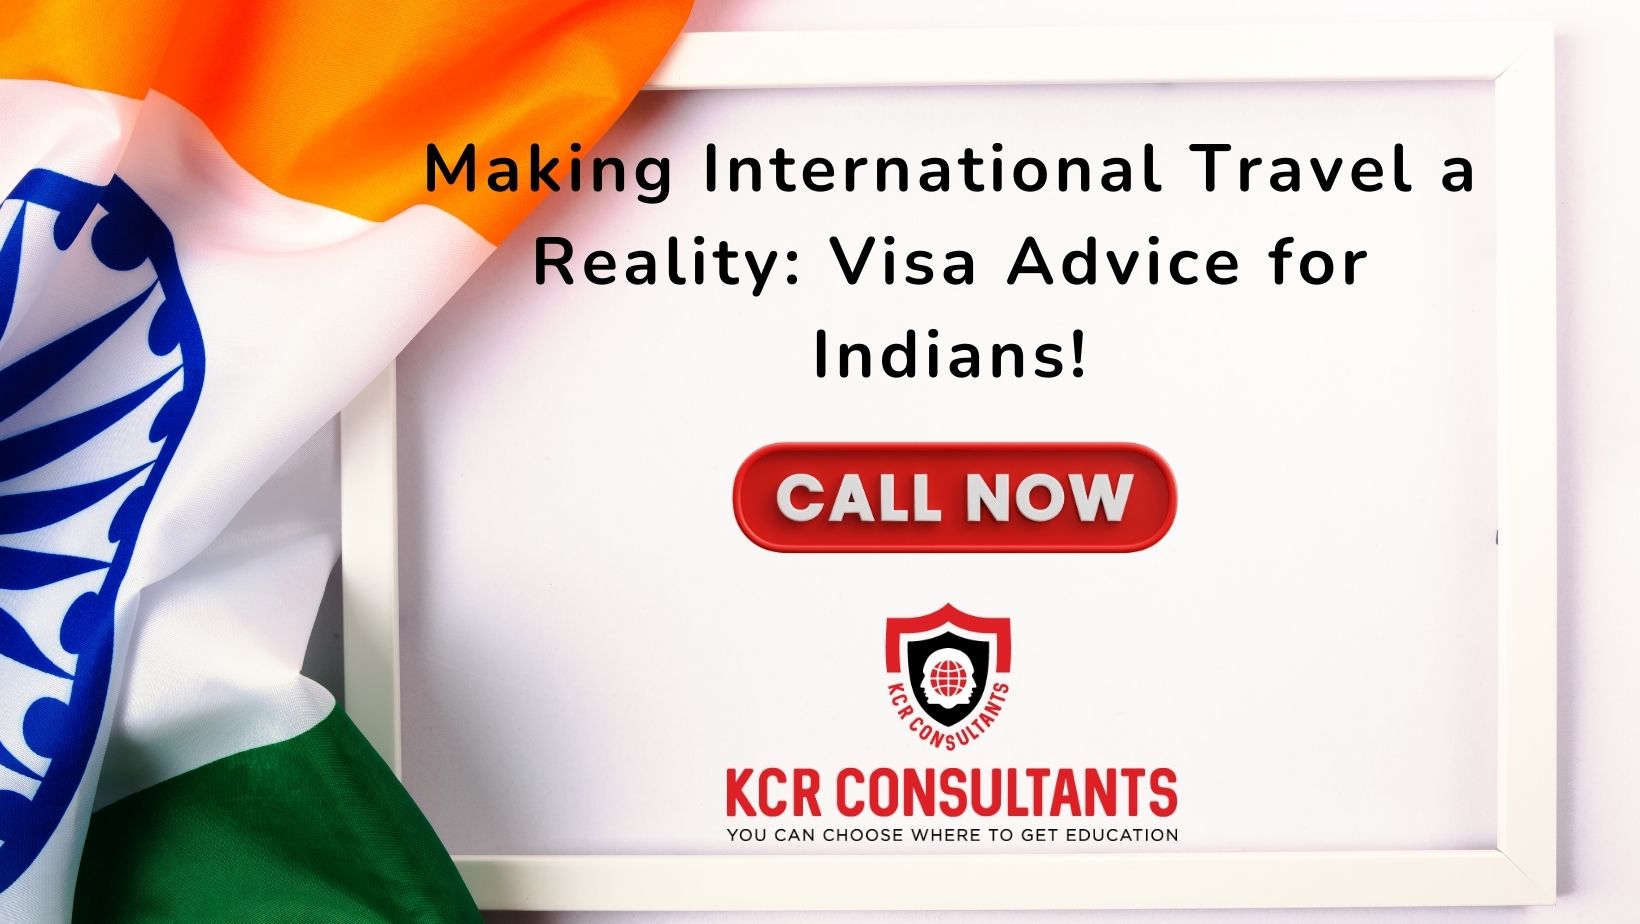 VISA - KCR CONSULTANTS - Contact us